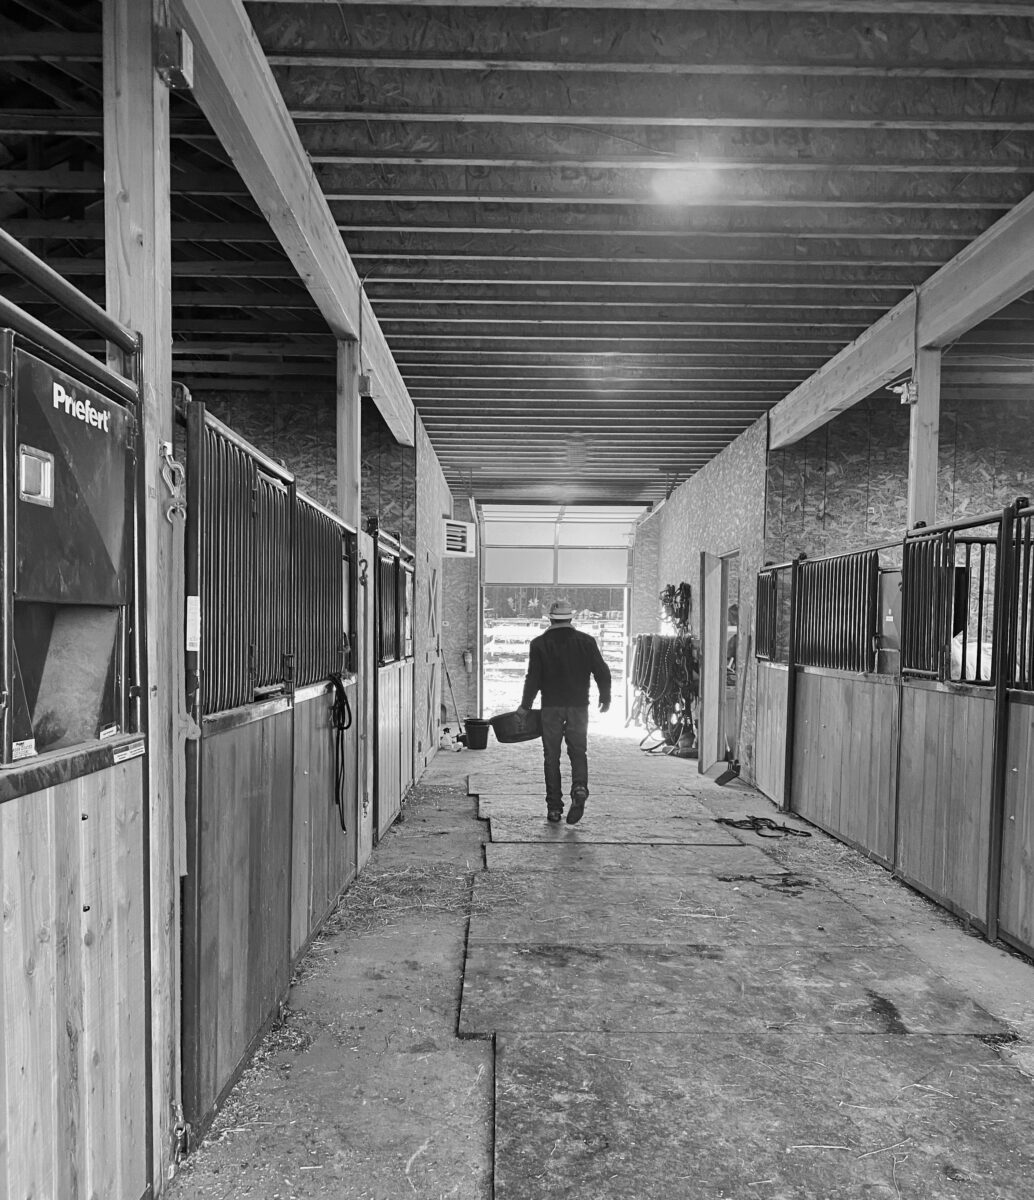 a lone cowboy or wrangler walking in a sunlit barn with a rubber feeding bucket